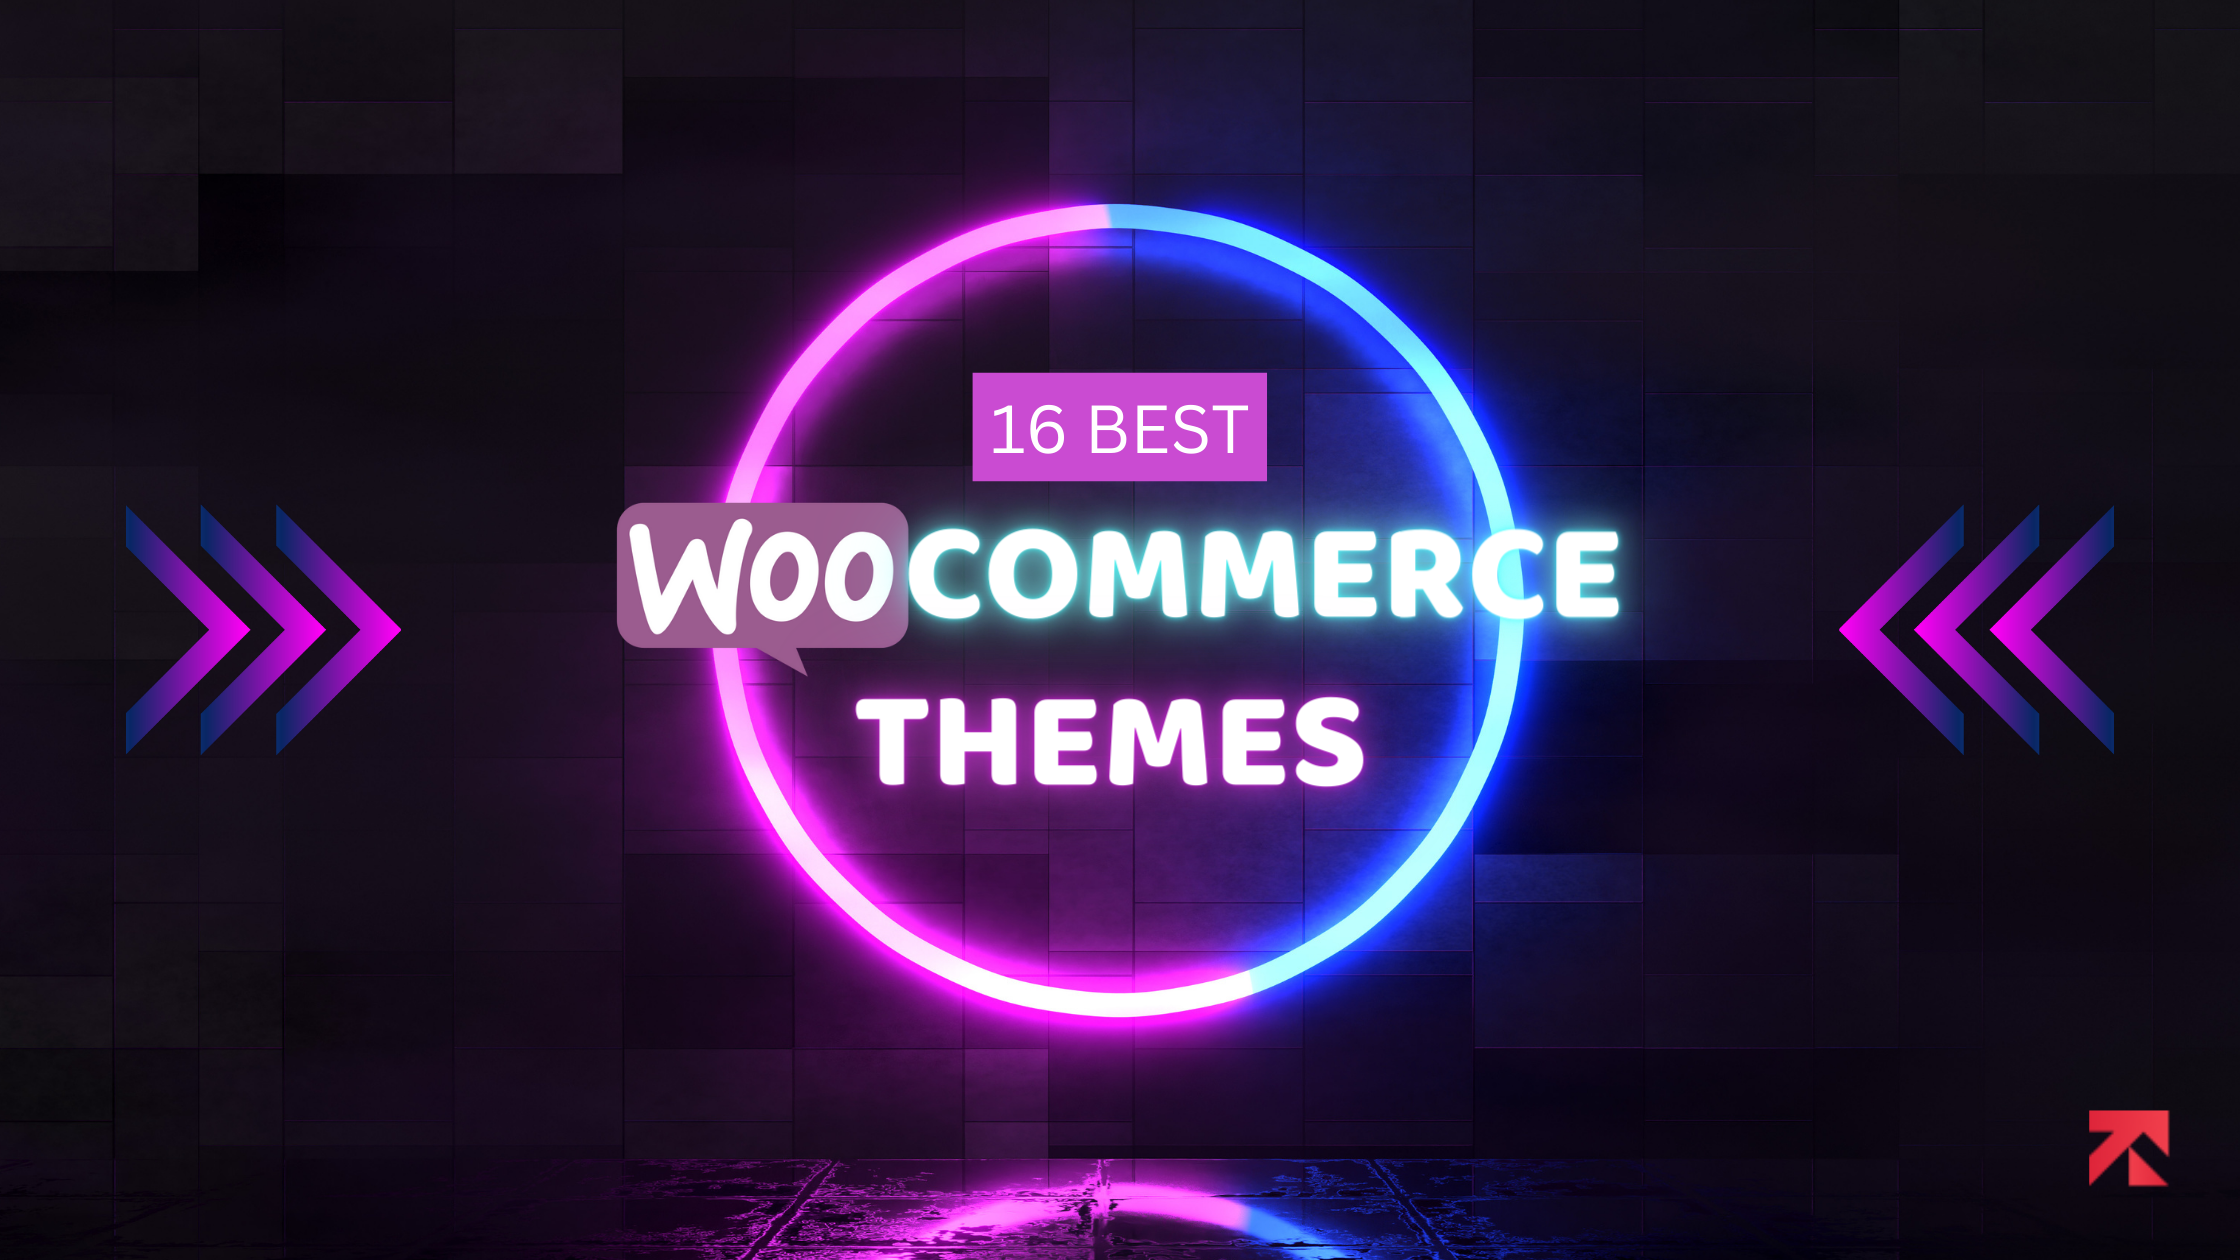 16 BEST woocommerce themes